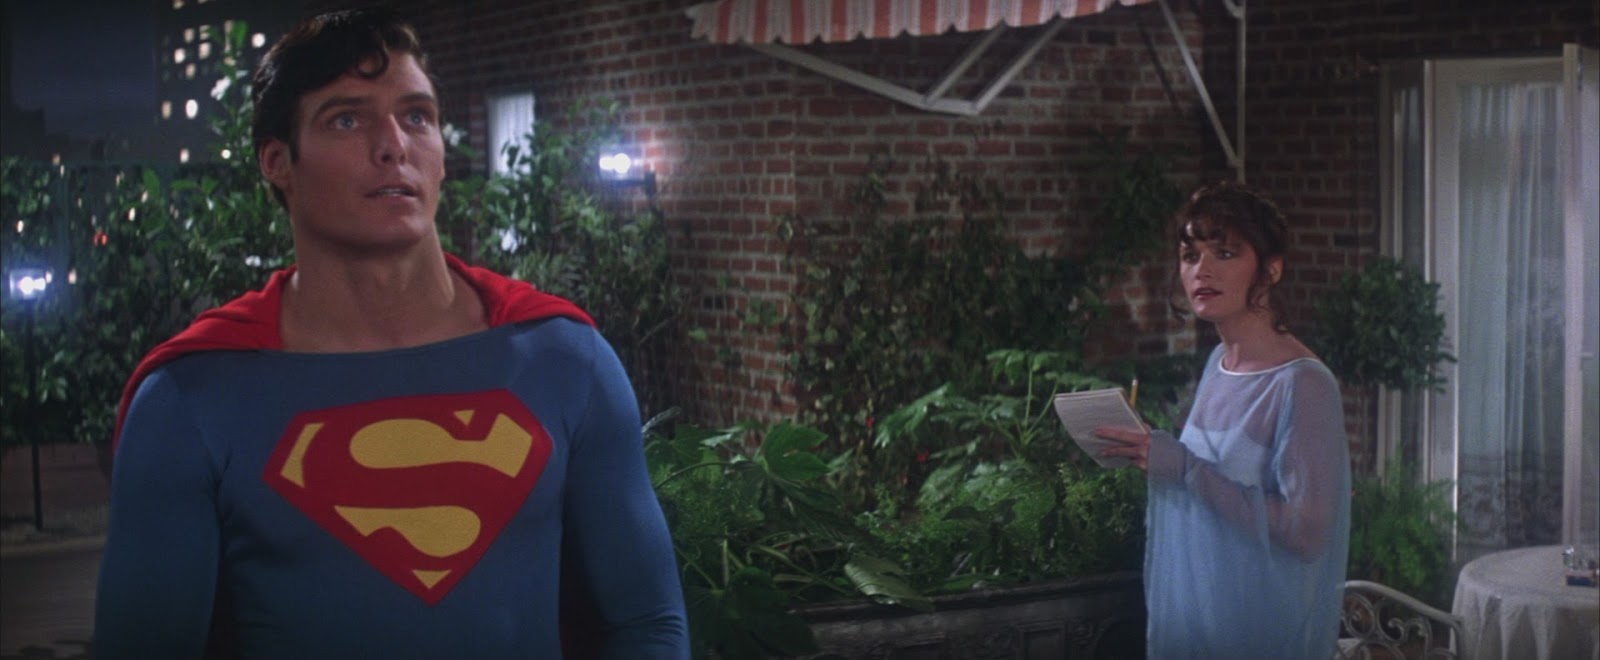 Morreu Margot Kidder, a Lois Lane dos filmes clássicos do Superman